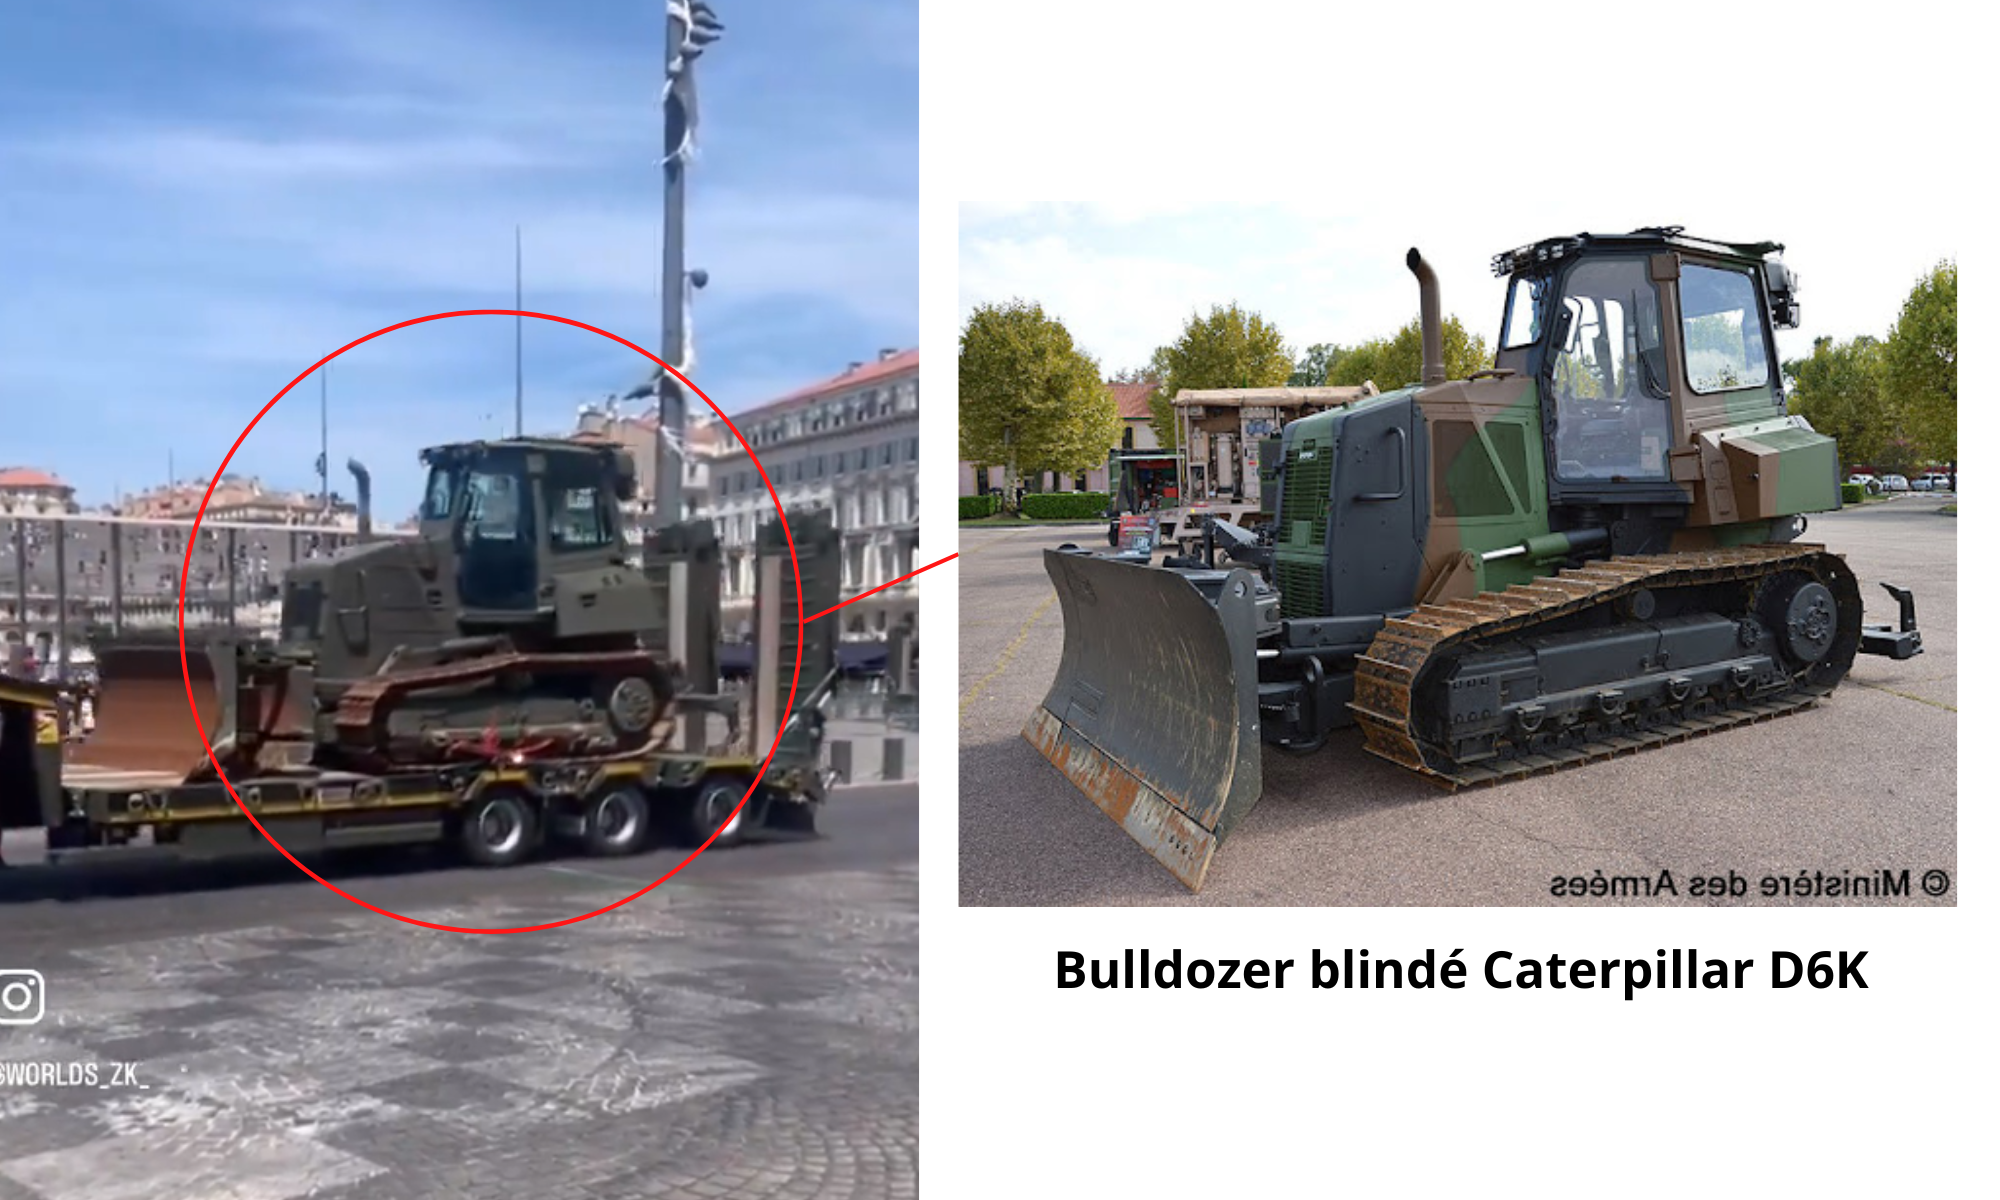 The last vehicle filmed is an armoured bulldozer.